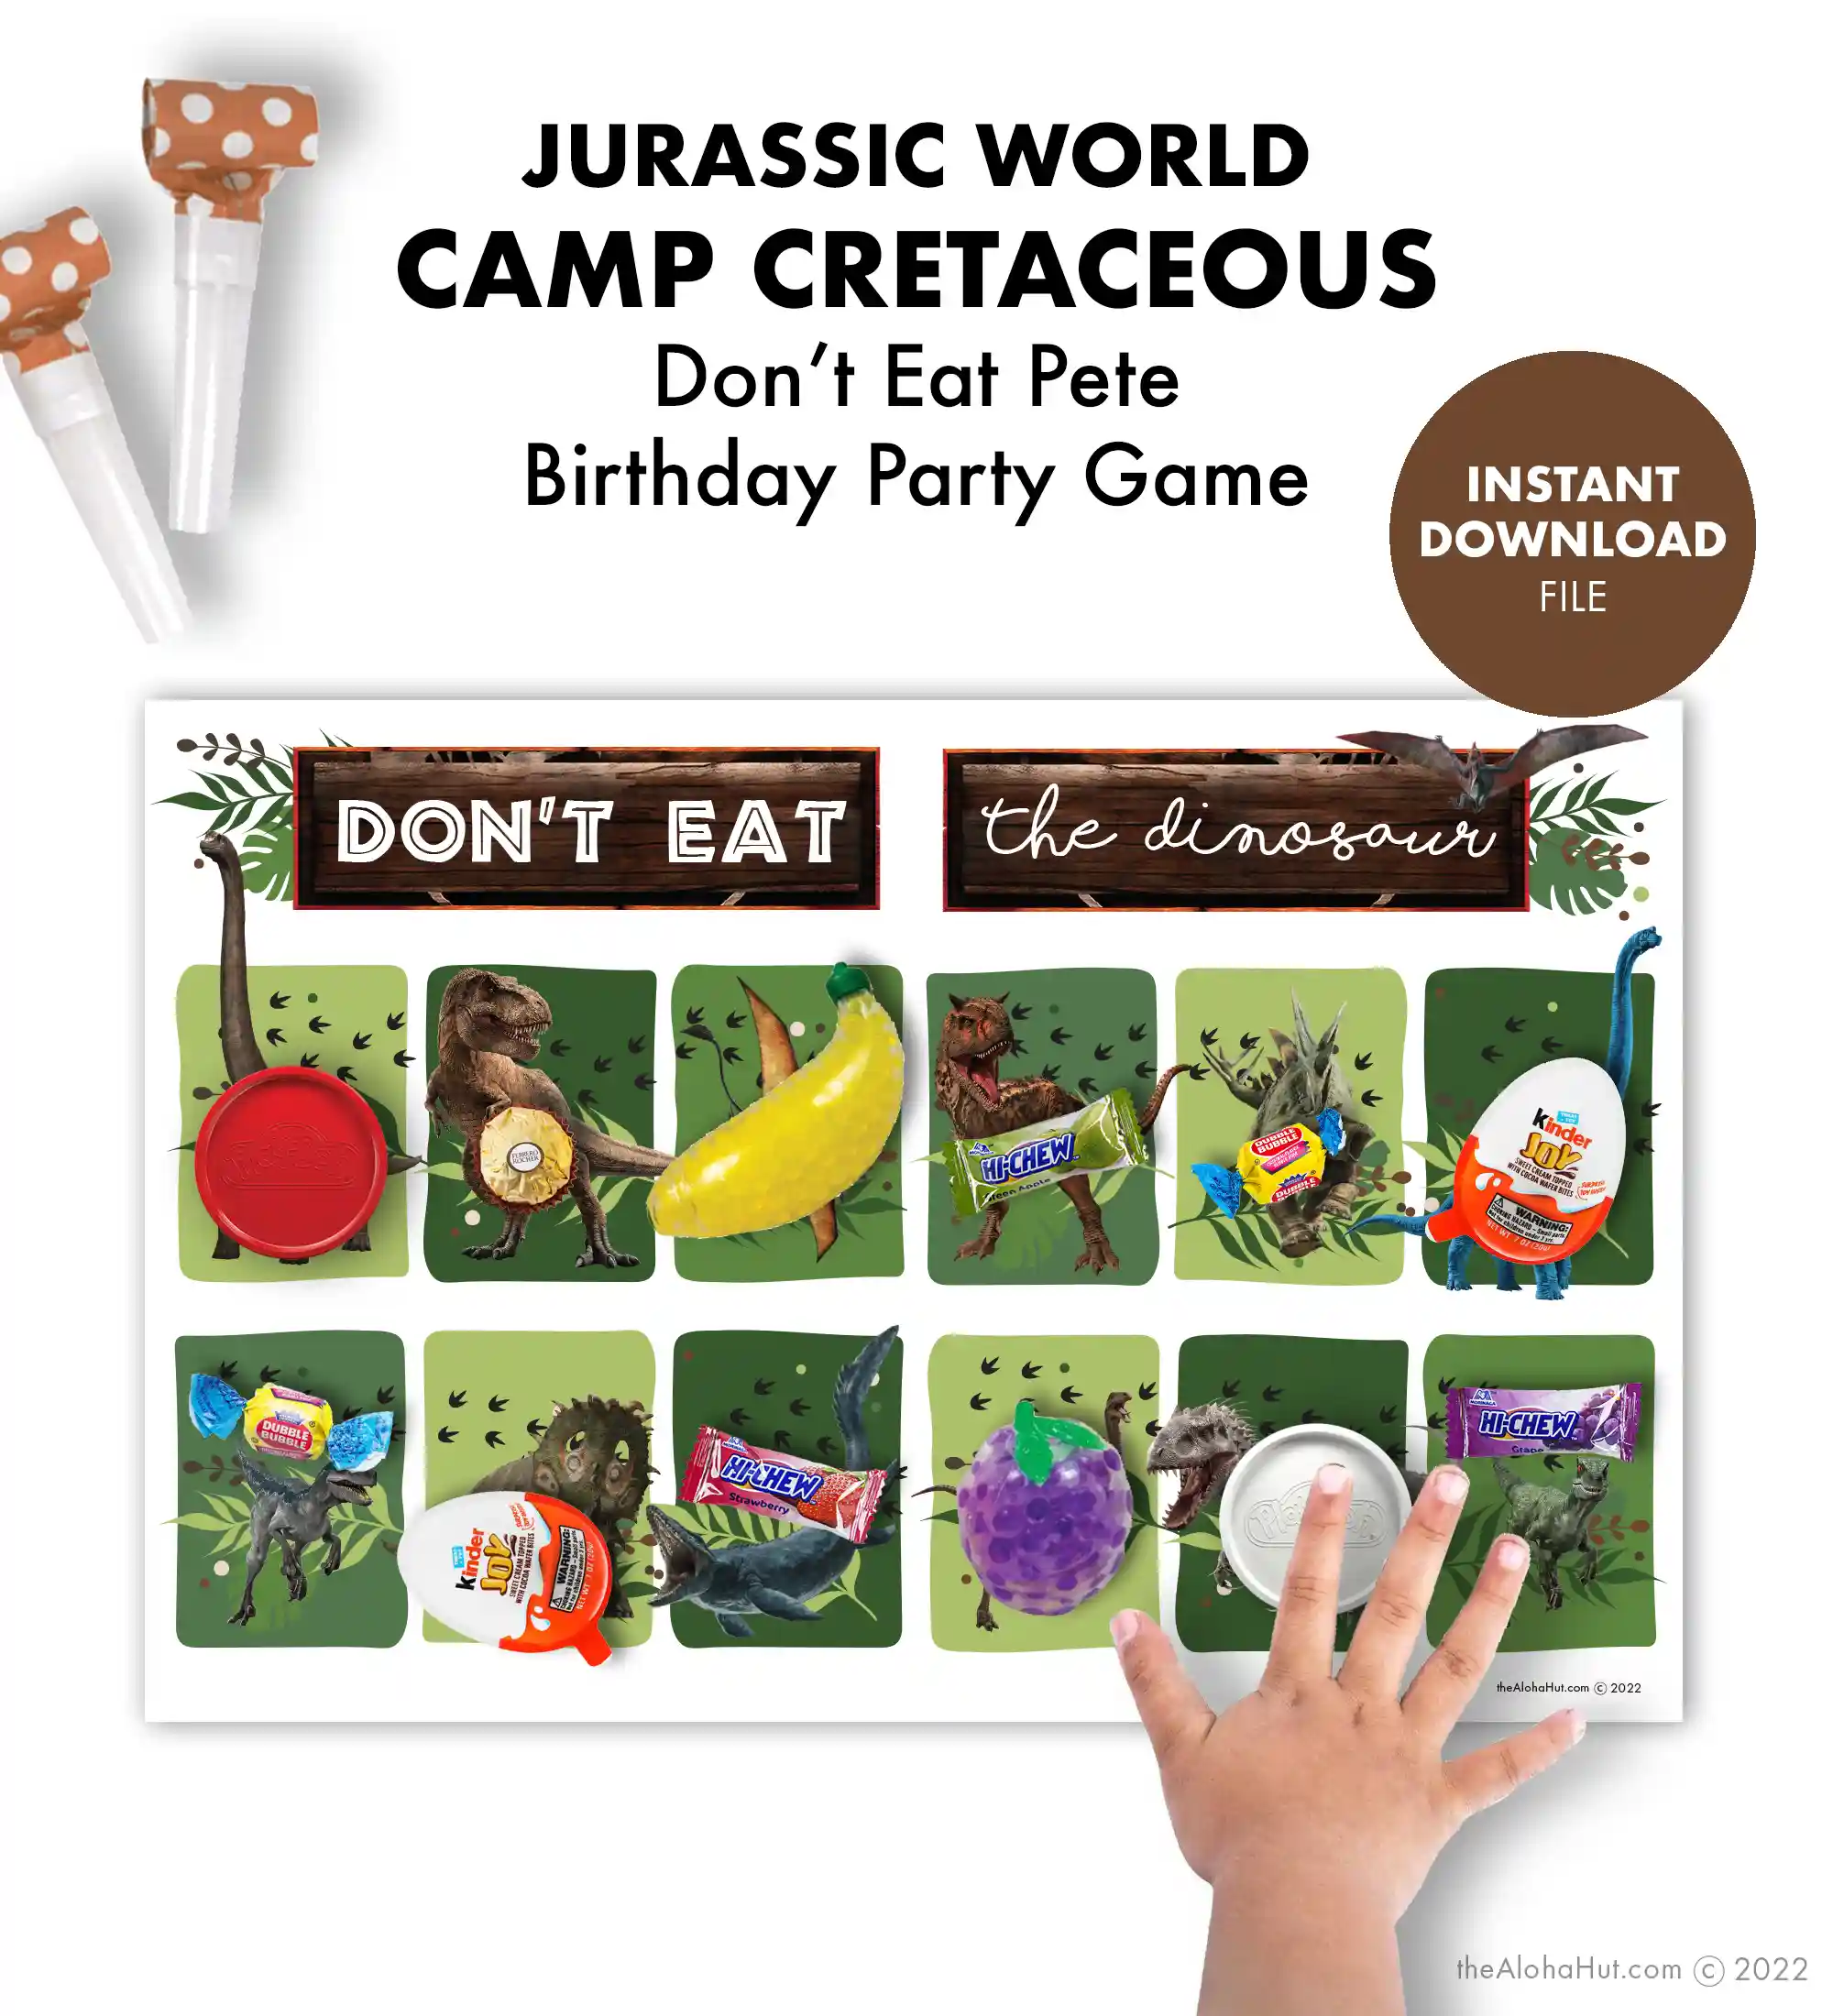 Jurassic World Camp Cretaceous Party Ideas - Dinosaur Party Ideas - free printable party decor & games - don't eat pete